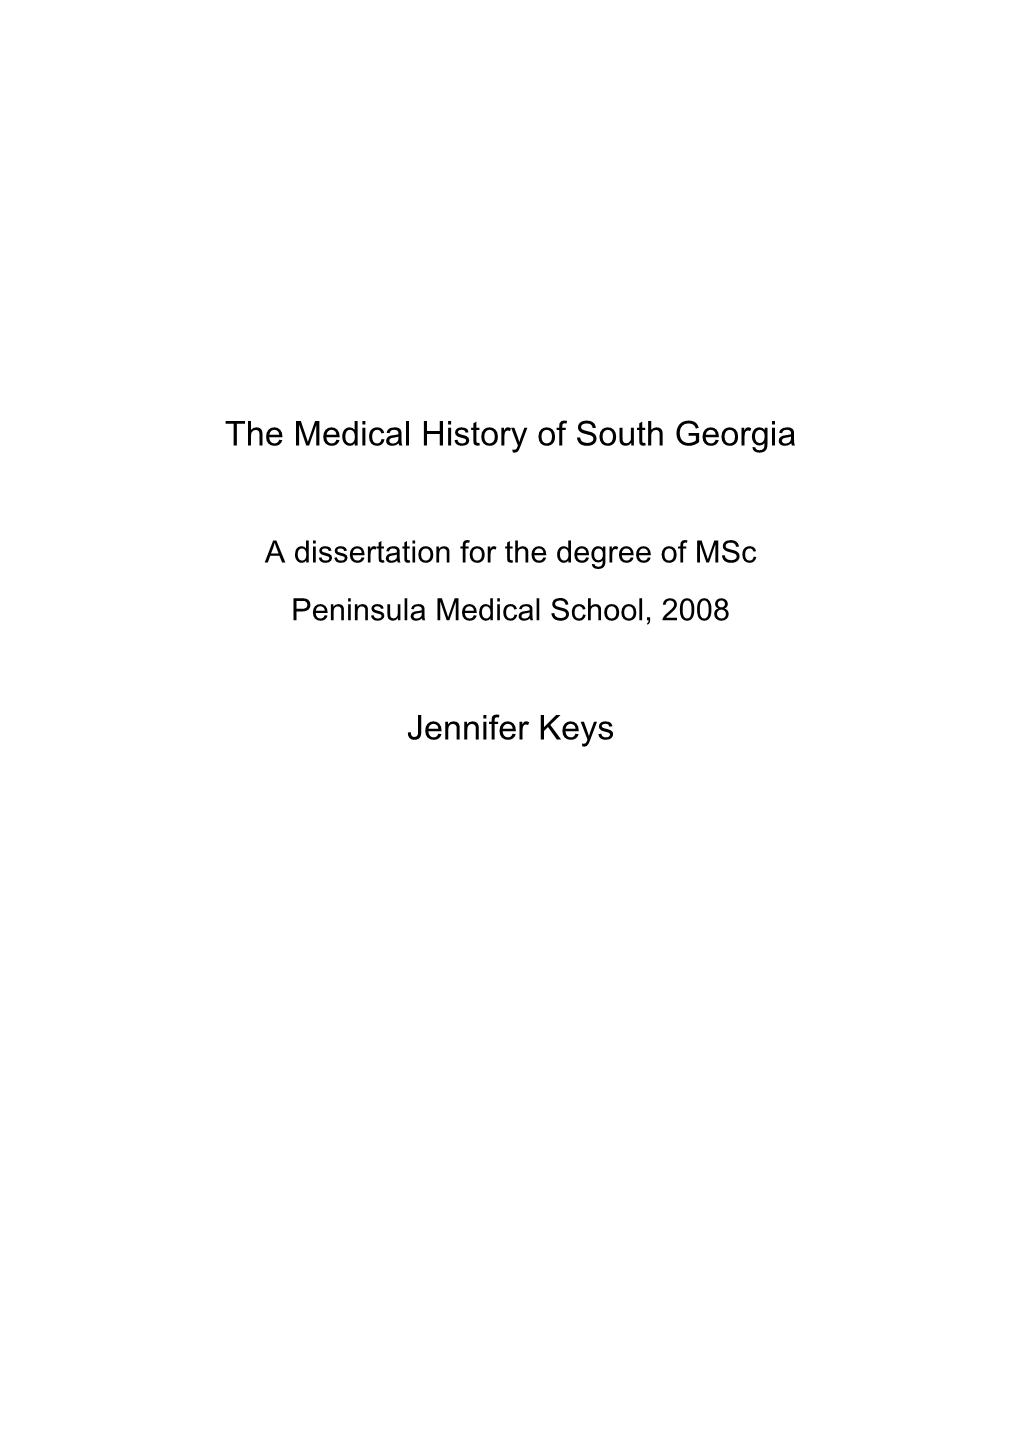 The Medical History of South Georgia Jennifer Keys